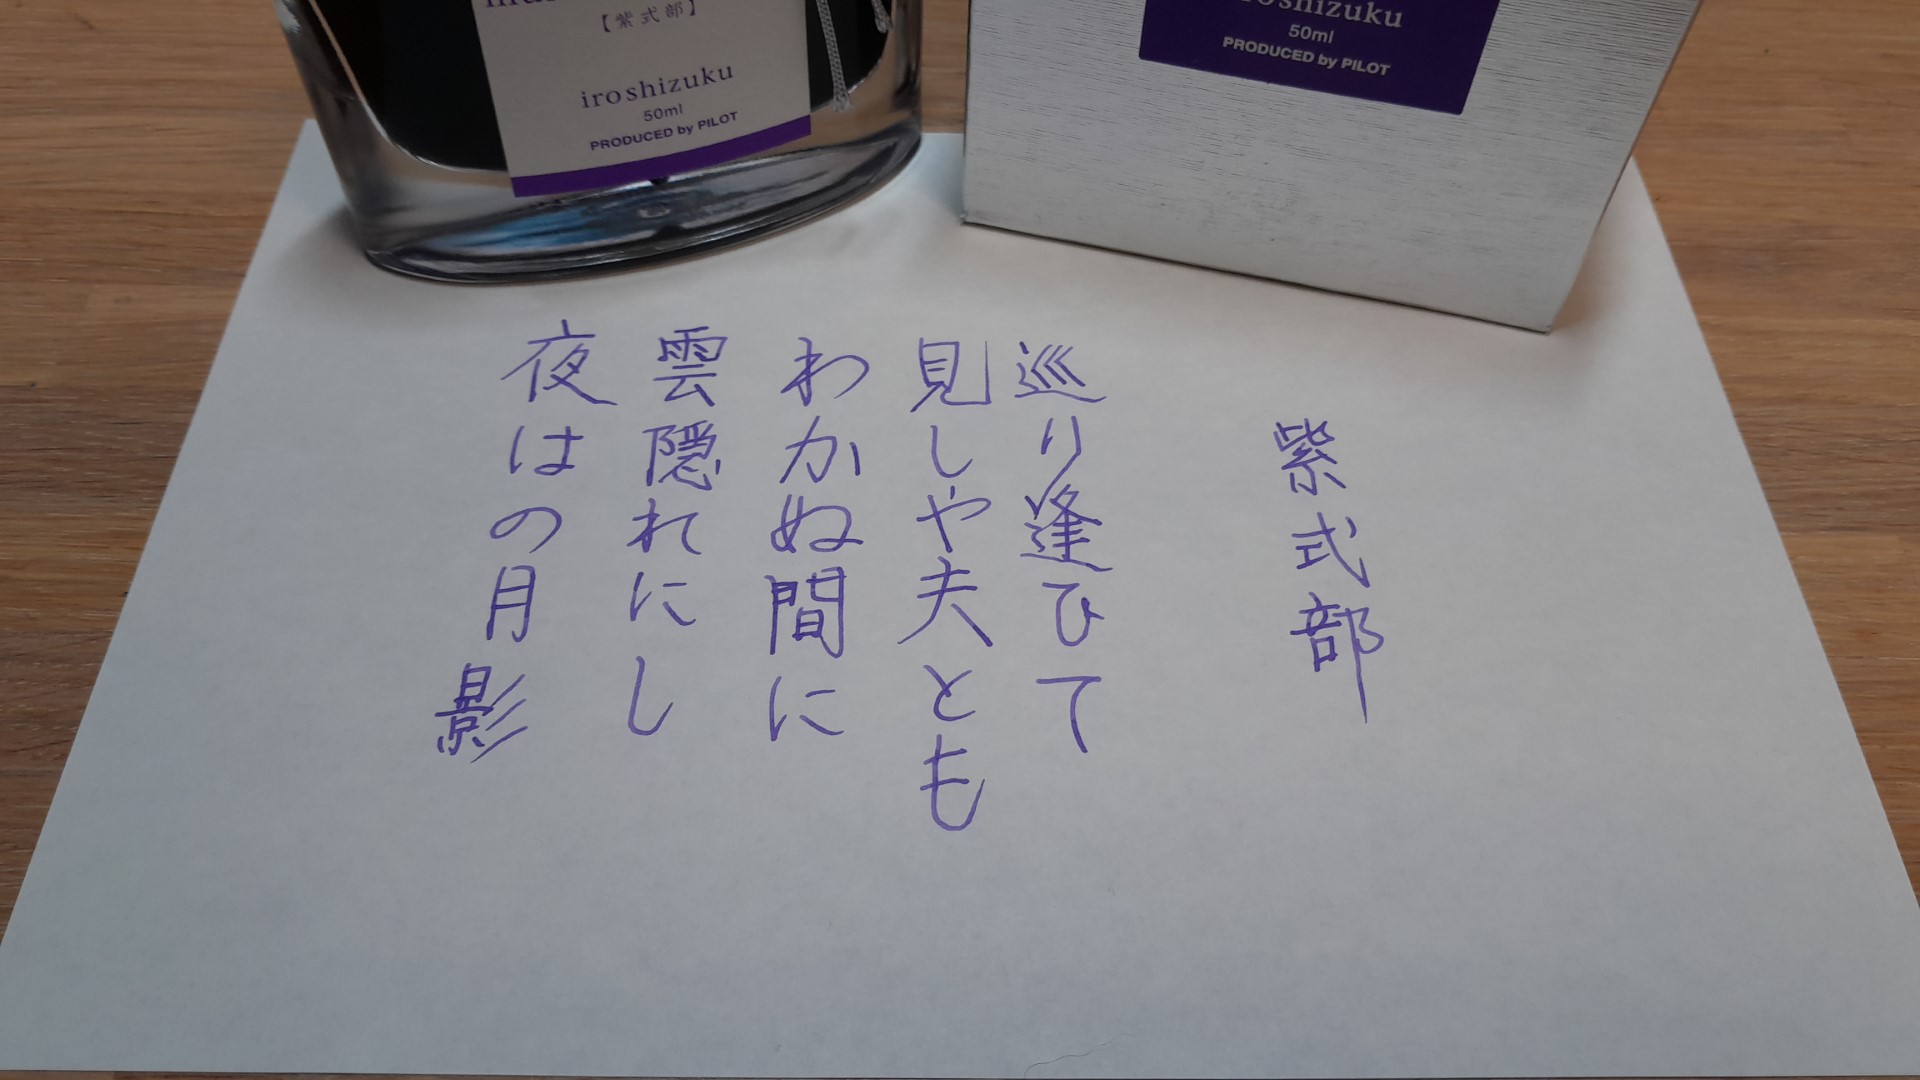 Gedicht von Murasaki Shikibu.jpg